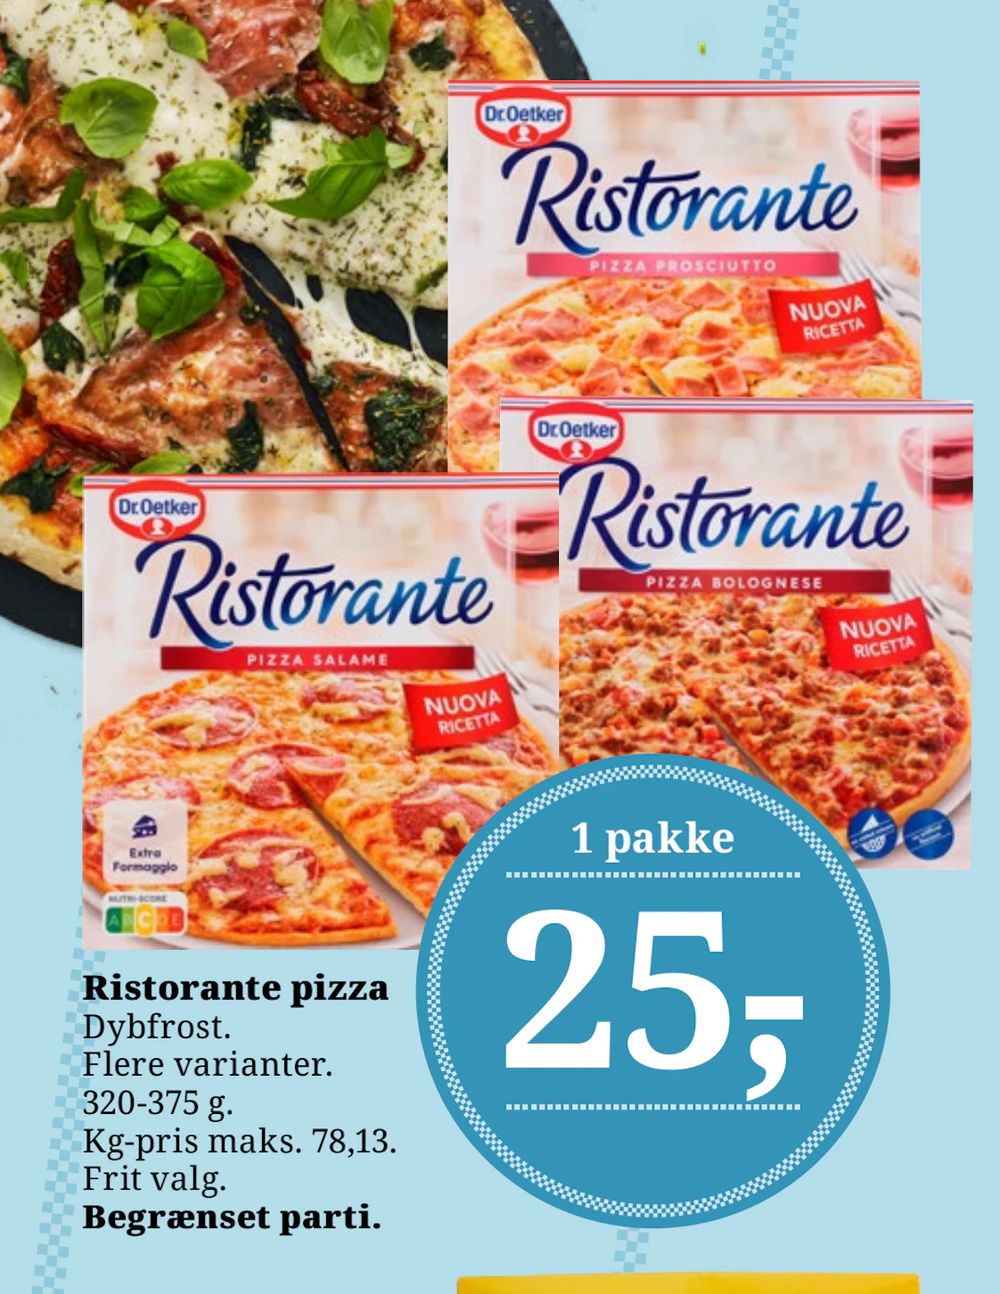 Tilbud på Ristorante pizza fra Brugsen til 25 kr.